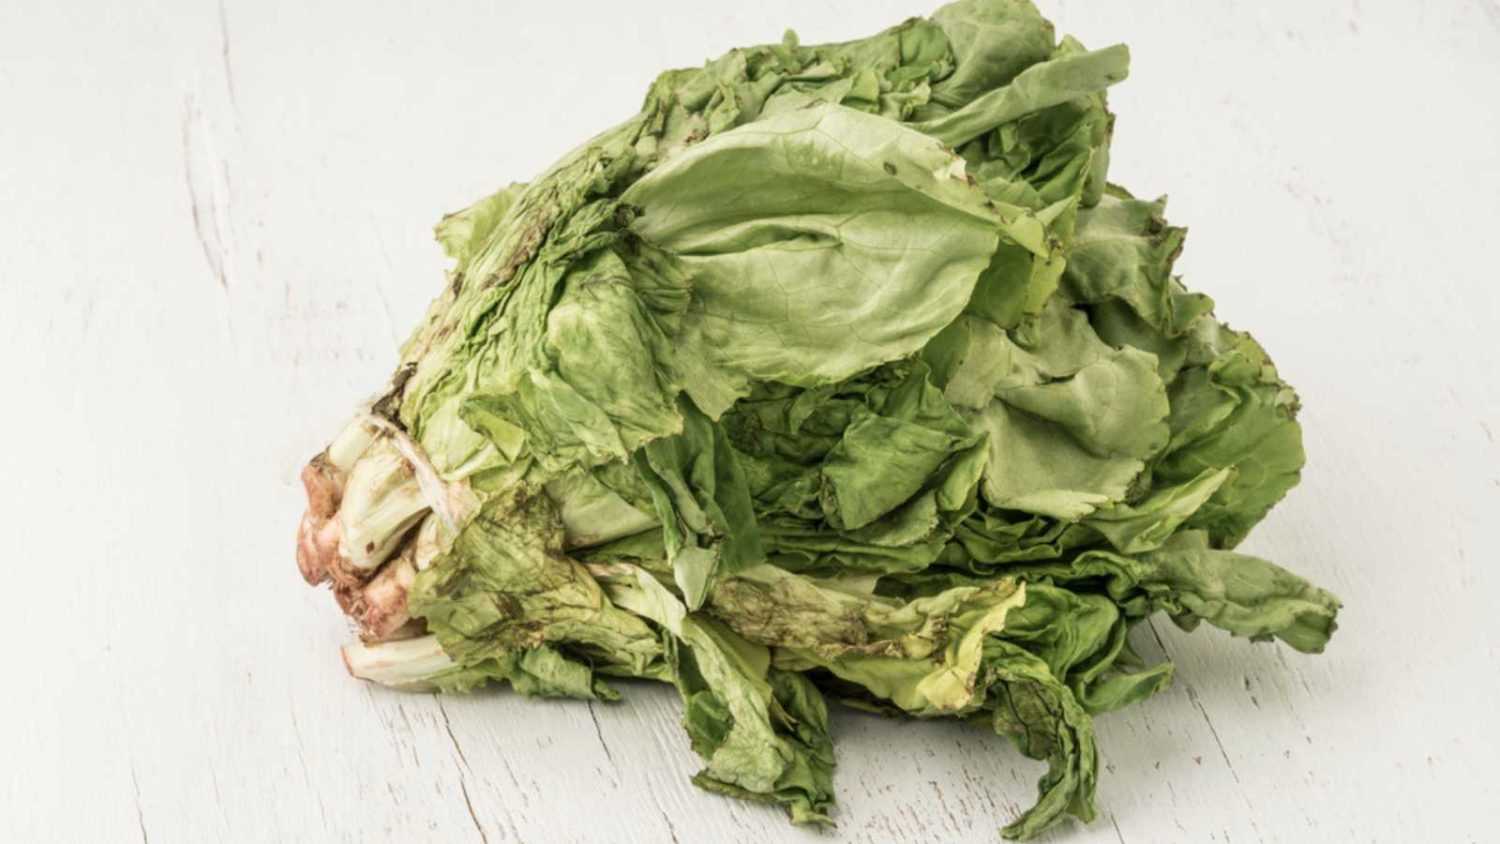 Rotten lettuce